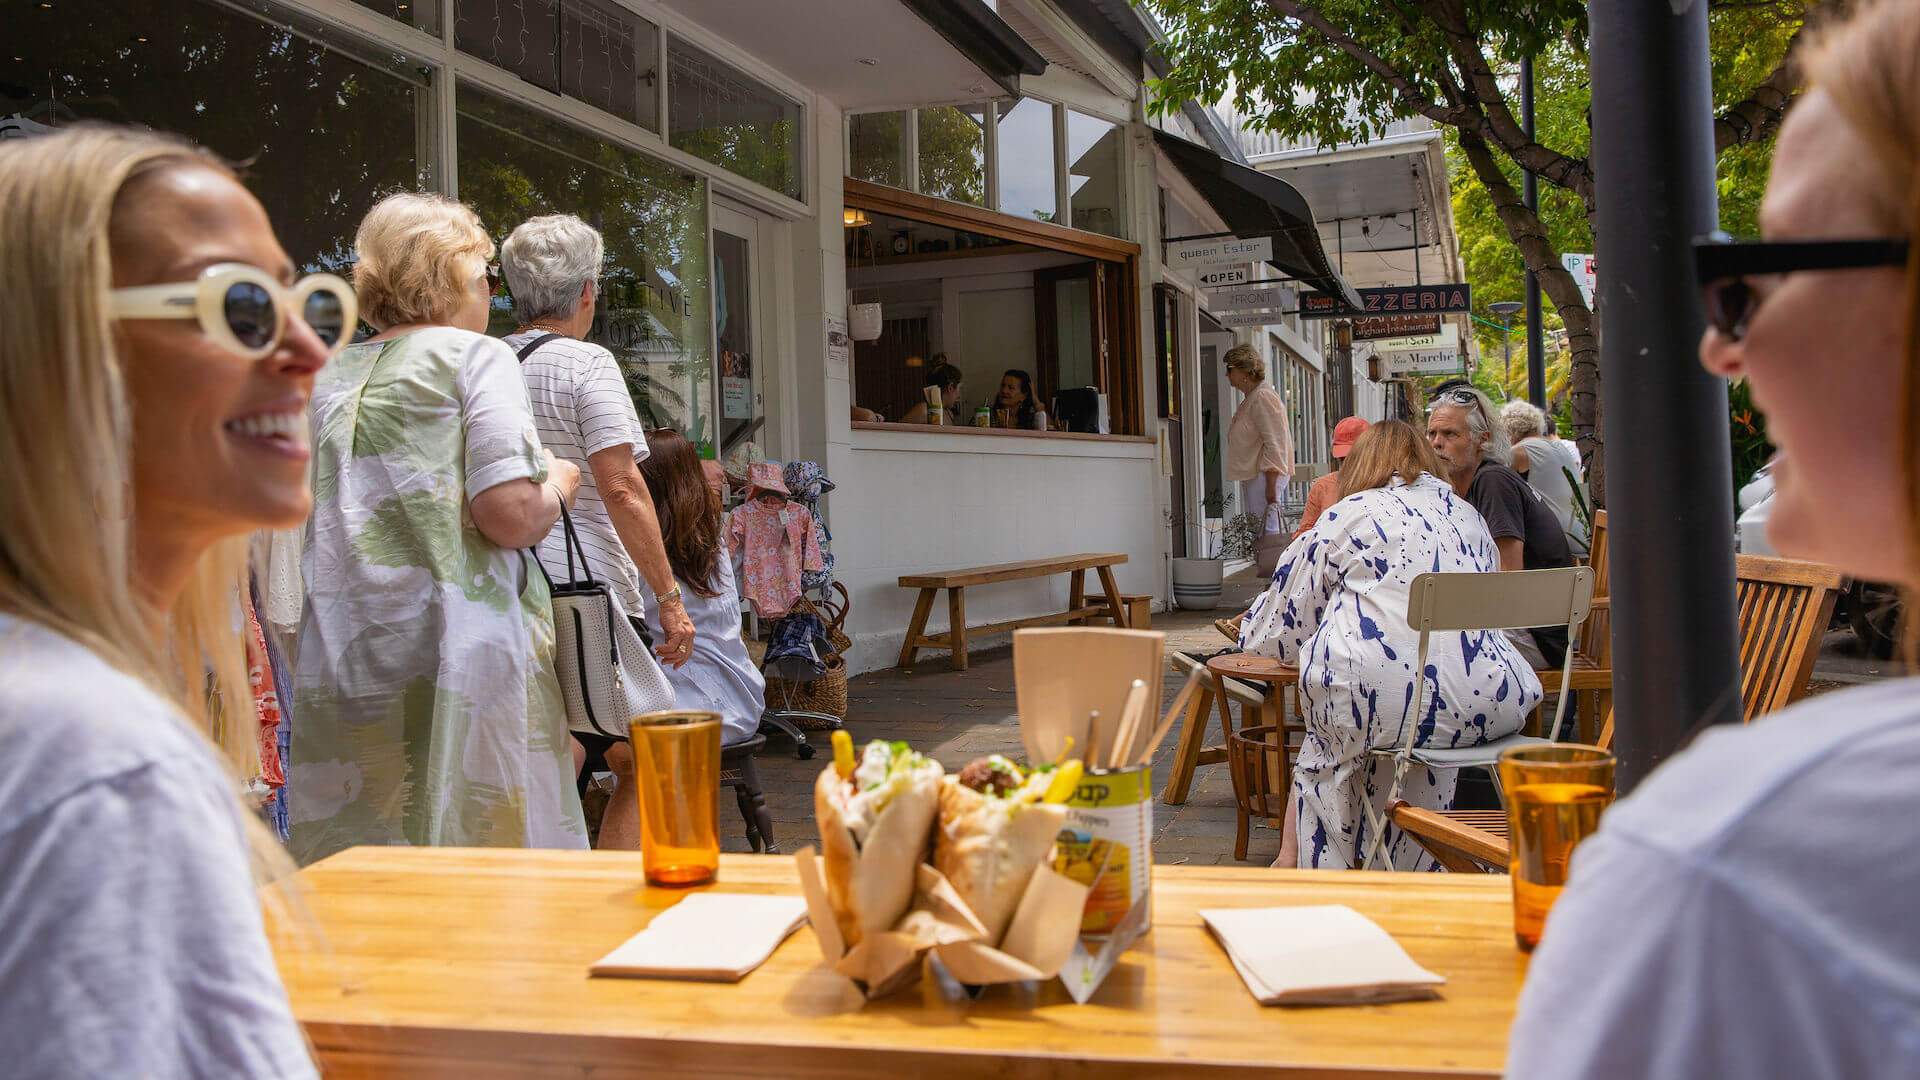 falafel wraps at Queen Ester - one of the best cafes in Sydney